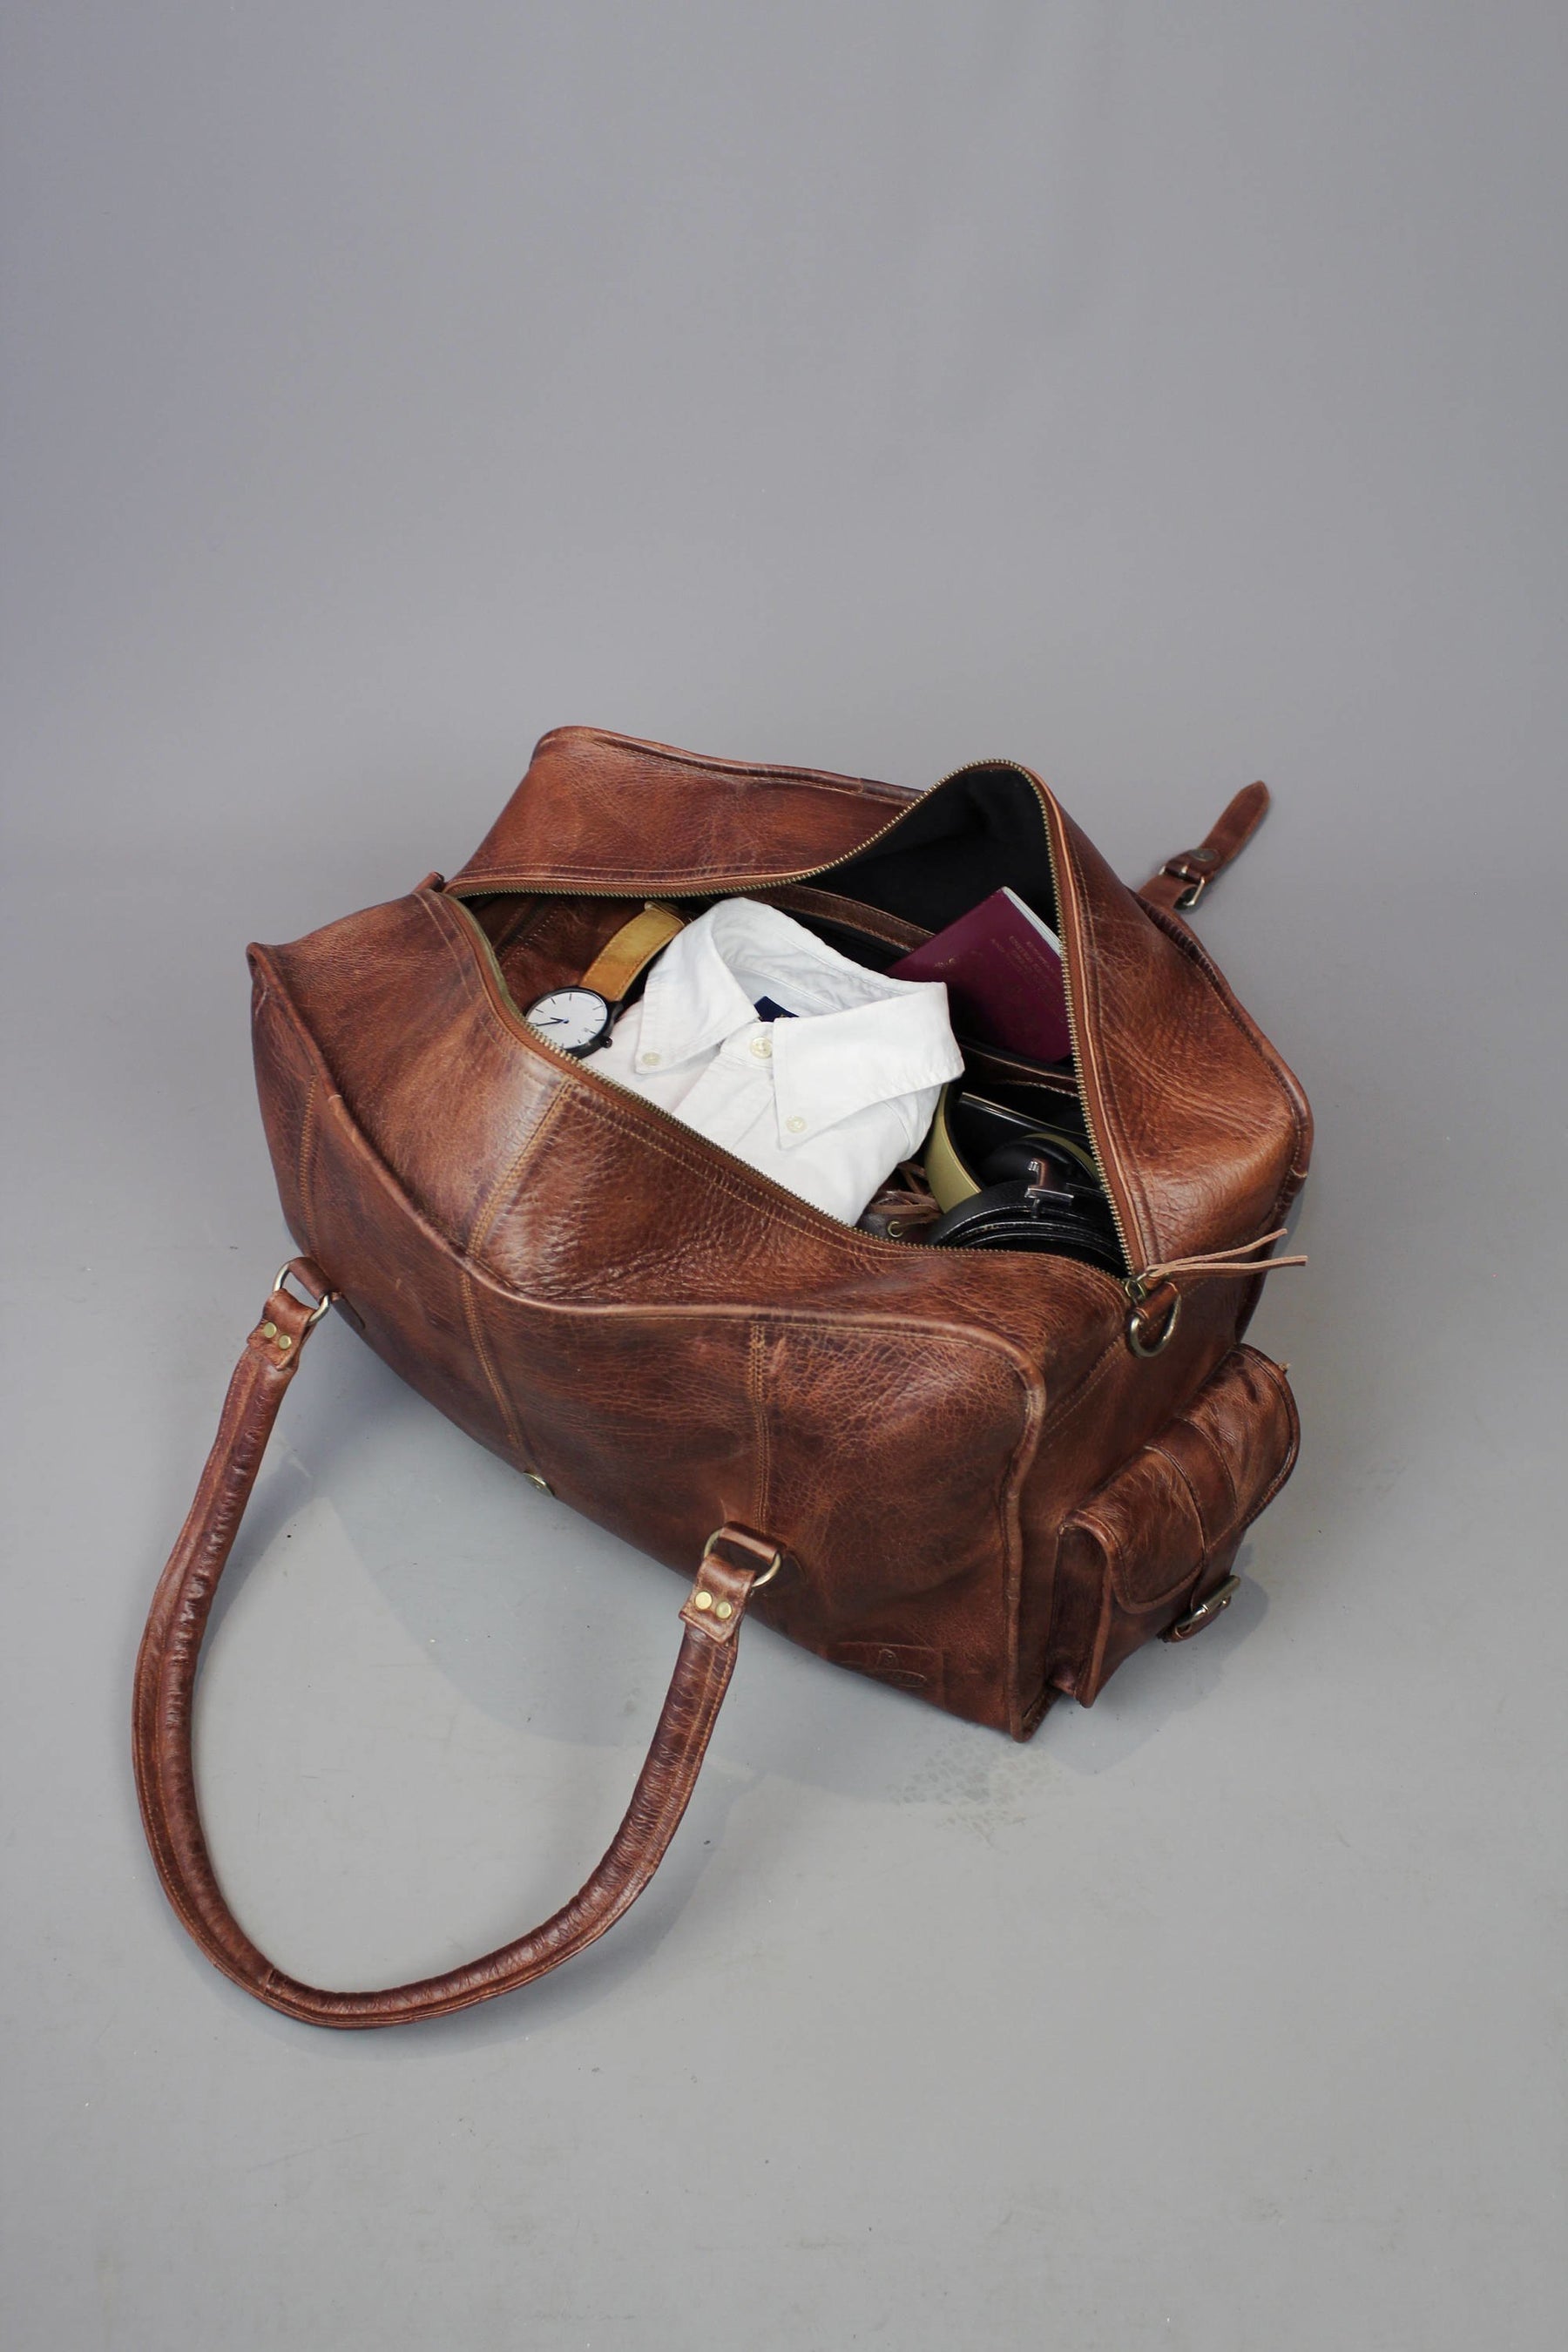 Widows Sons Travel Bag - Handmade Genuine Leather - Bricks Masons